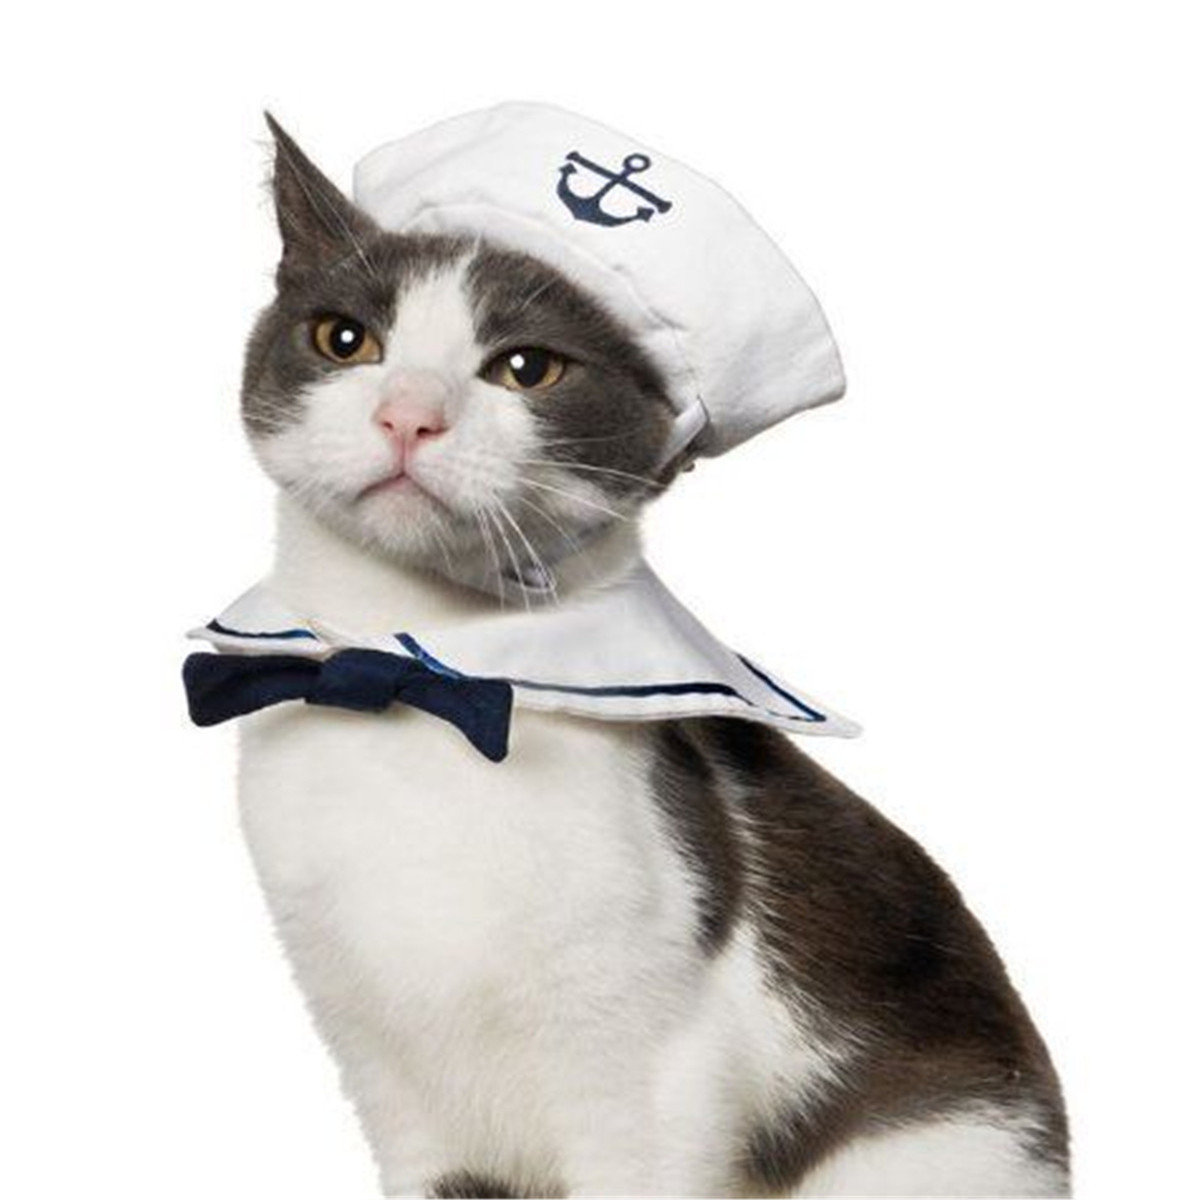 Fashion Pet Puppy Cat Small Dog Sailor Suit Adjustable Outfit Costume Hat & Cape